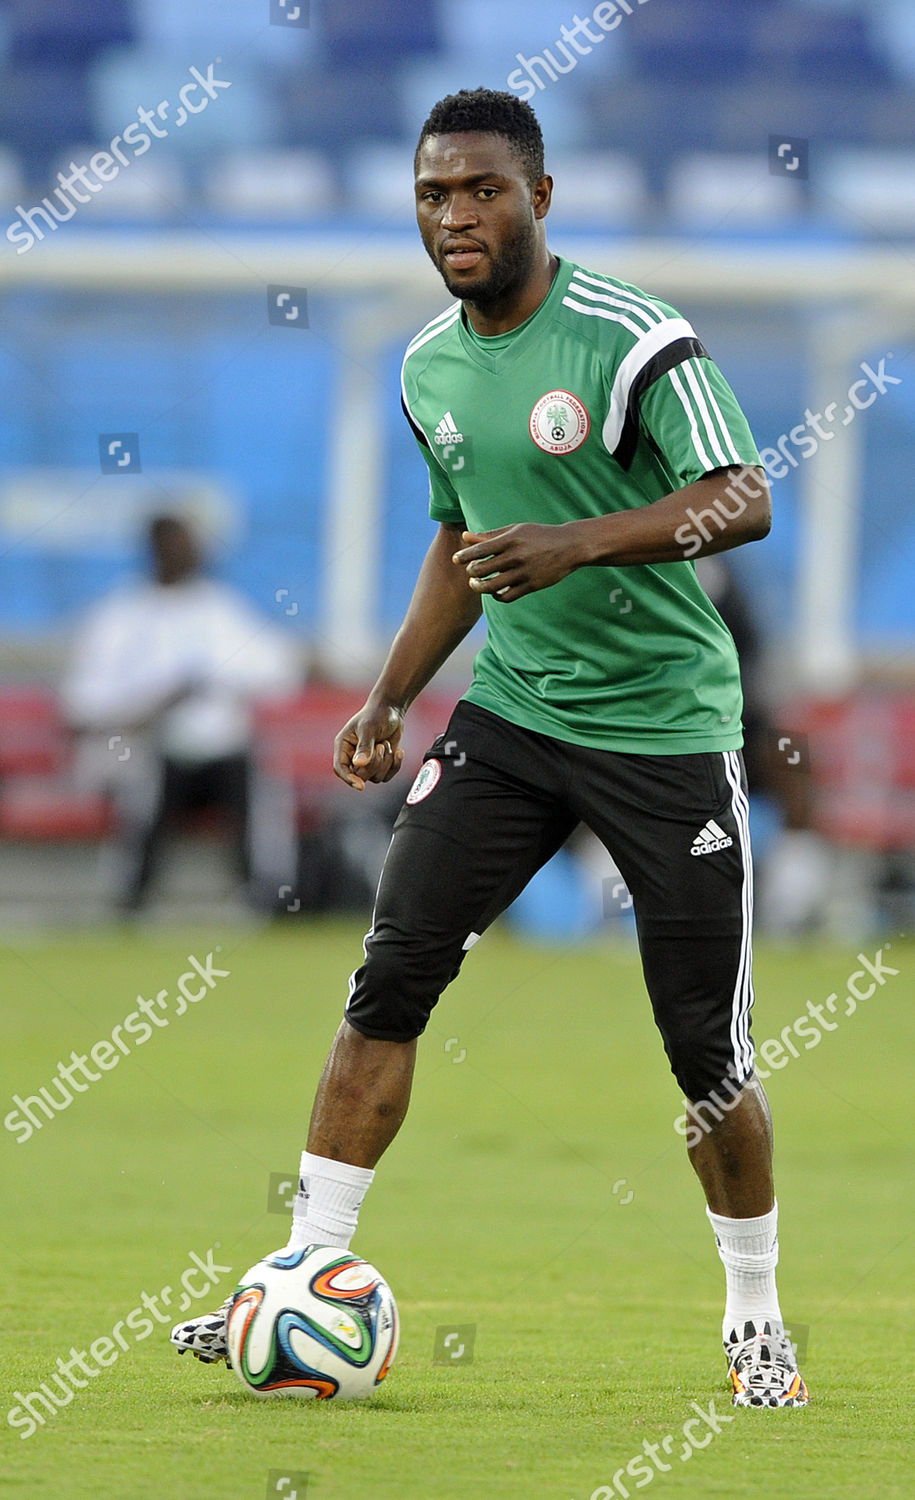 #476-NIGERIA-AZUBUIKE EGWUEKWE PANINI WORLD CUP 2014 